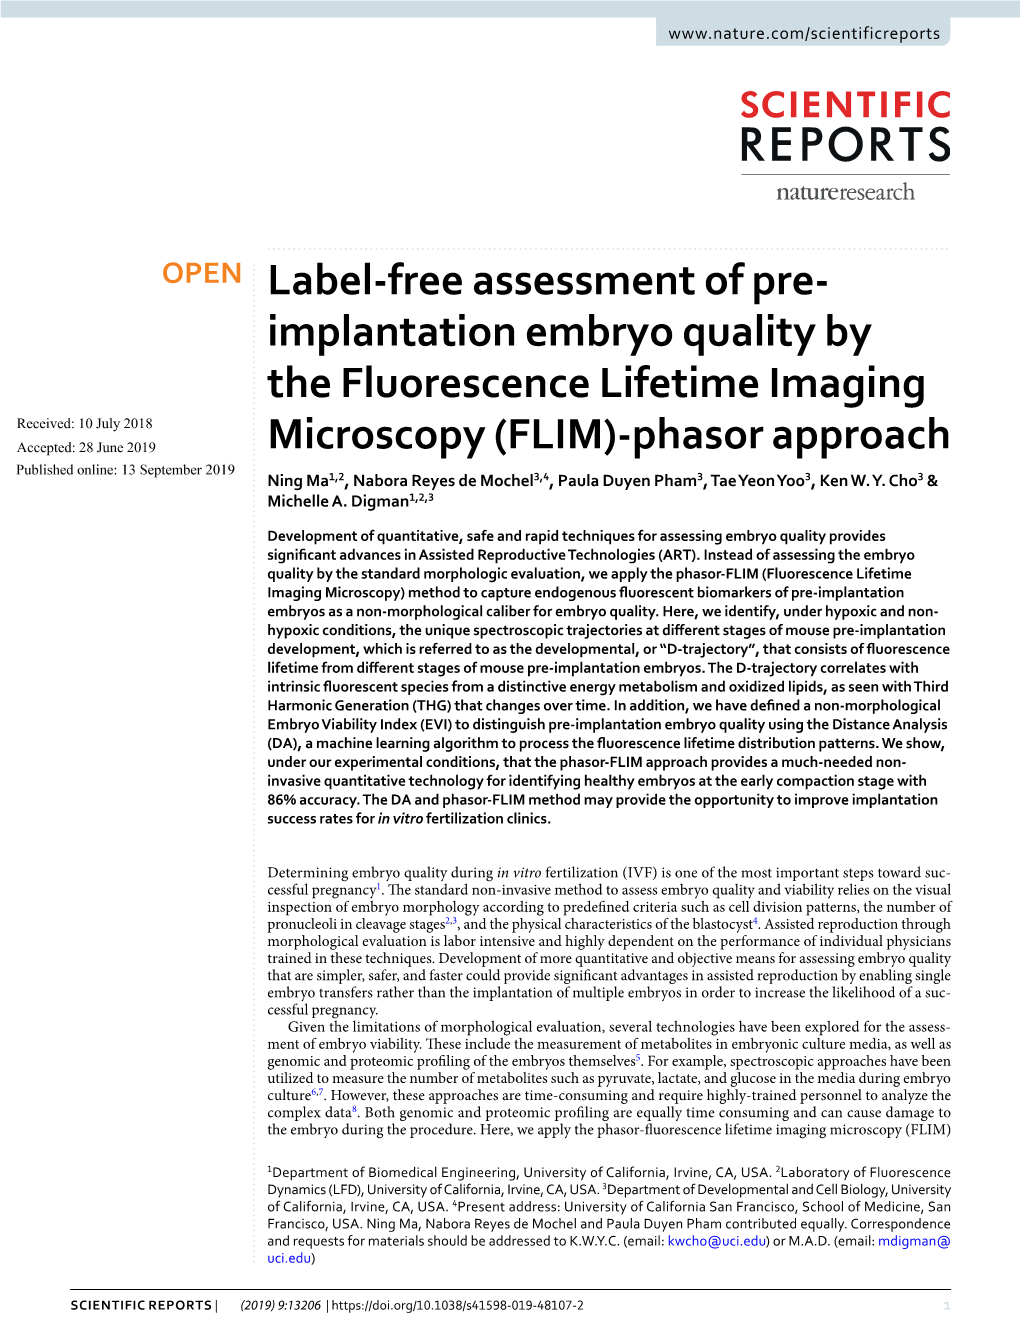 Label-Free Assessment of Pre-Implantation Embryo